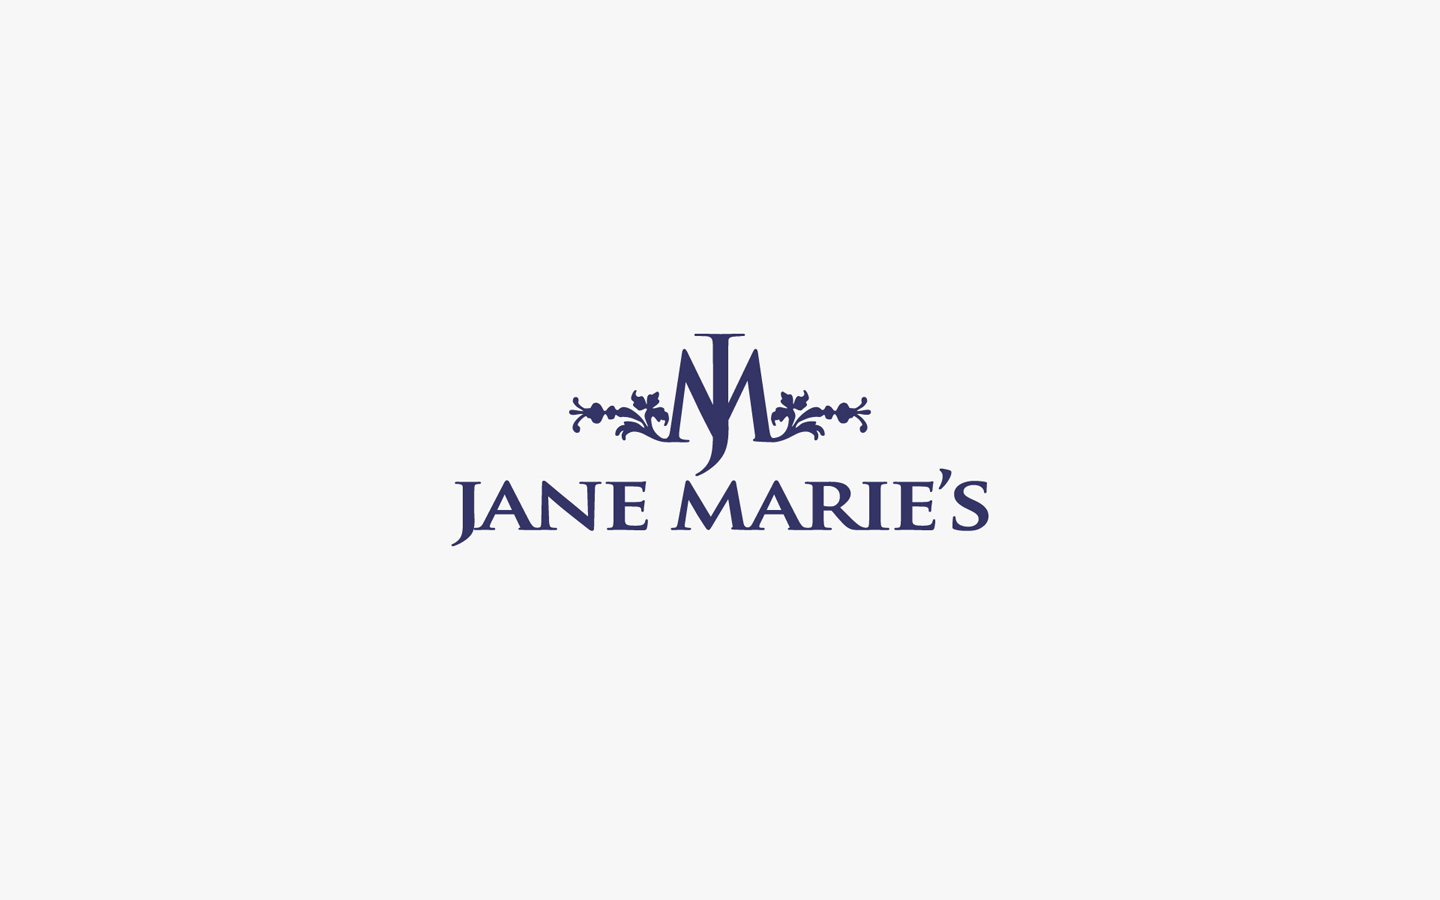 Jane Marie's Logo Design In Brand Colour